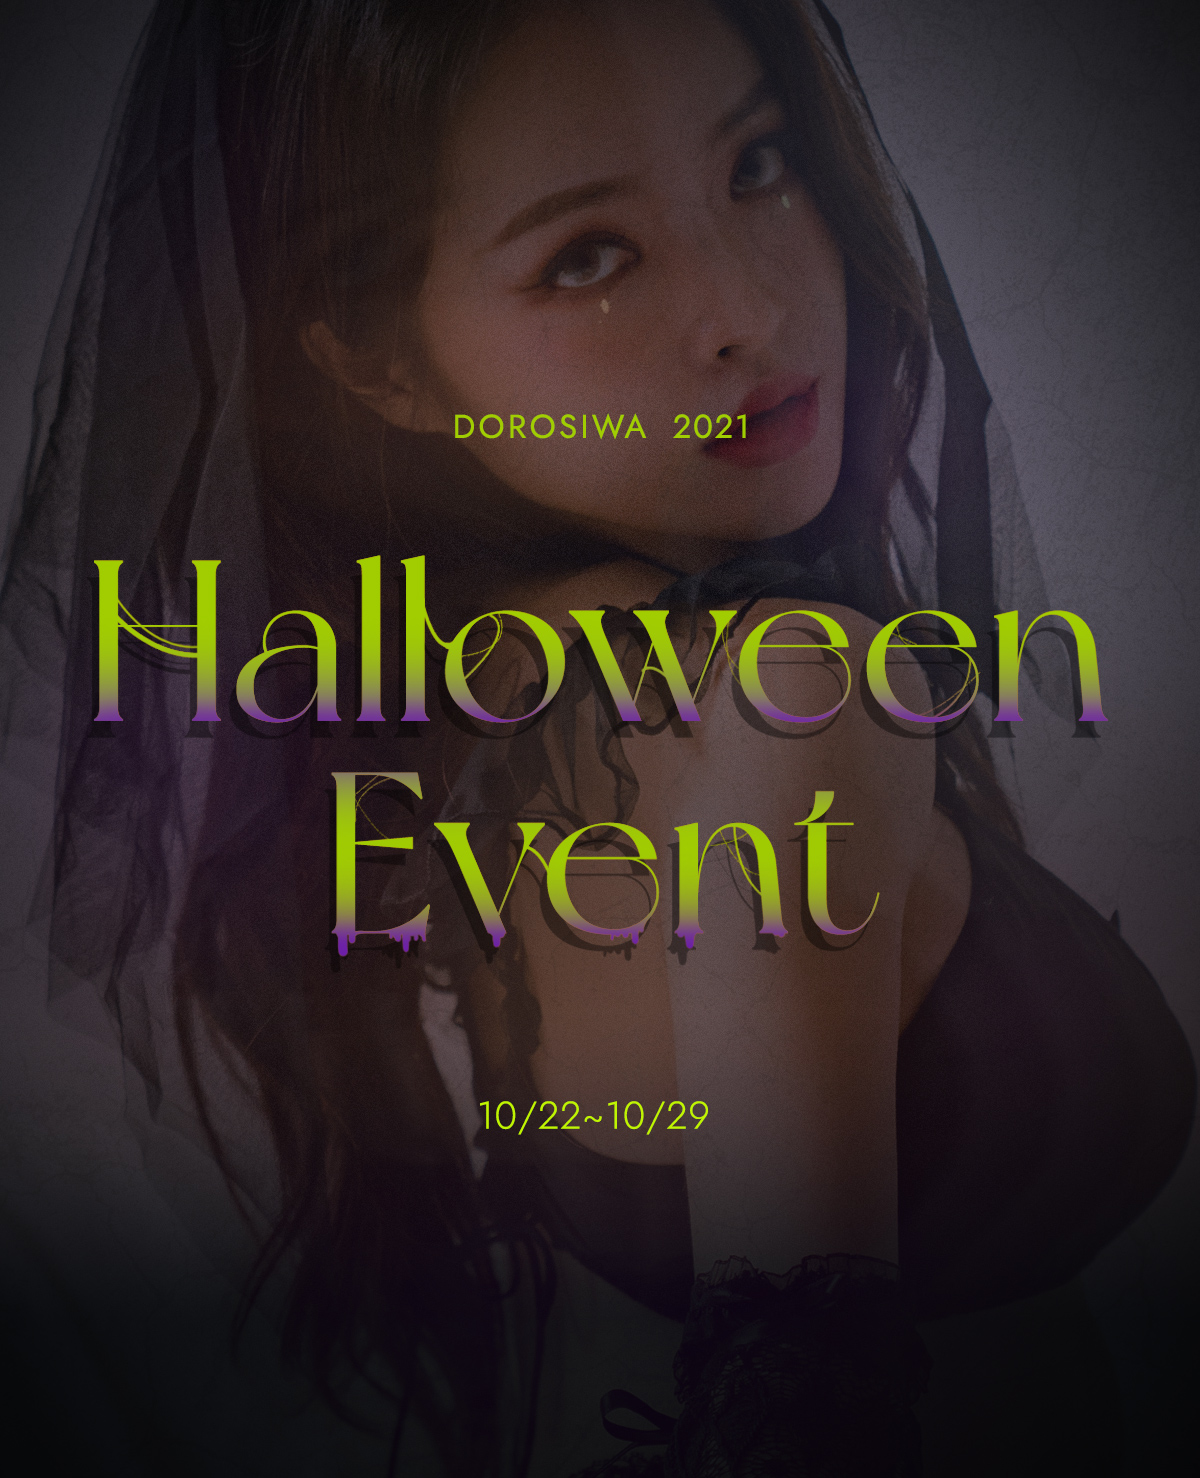 2021 Halloween event